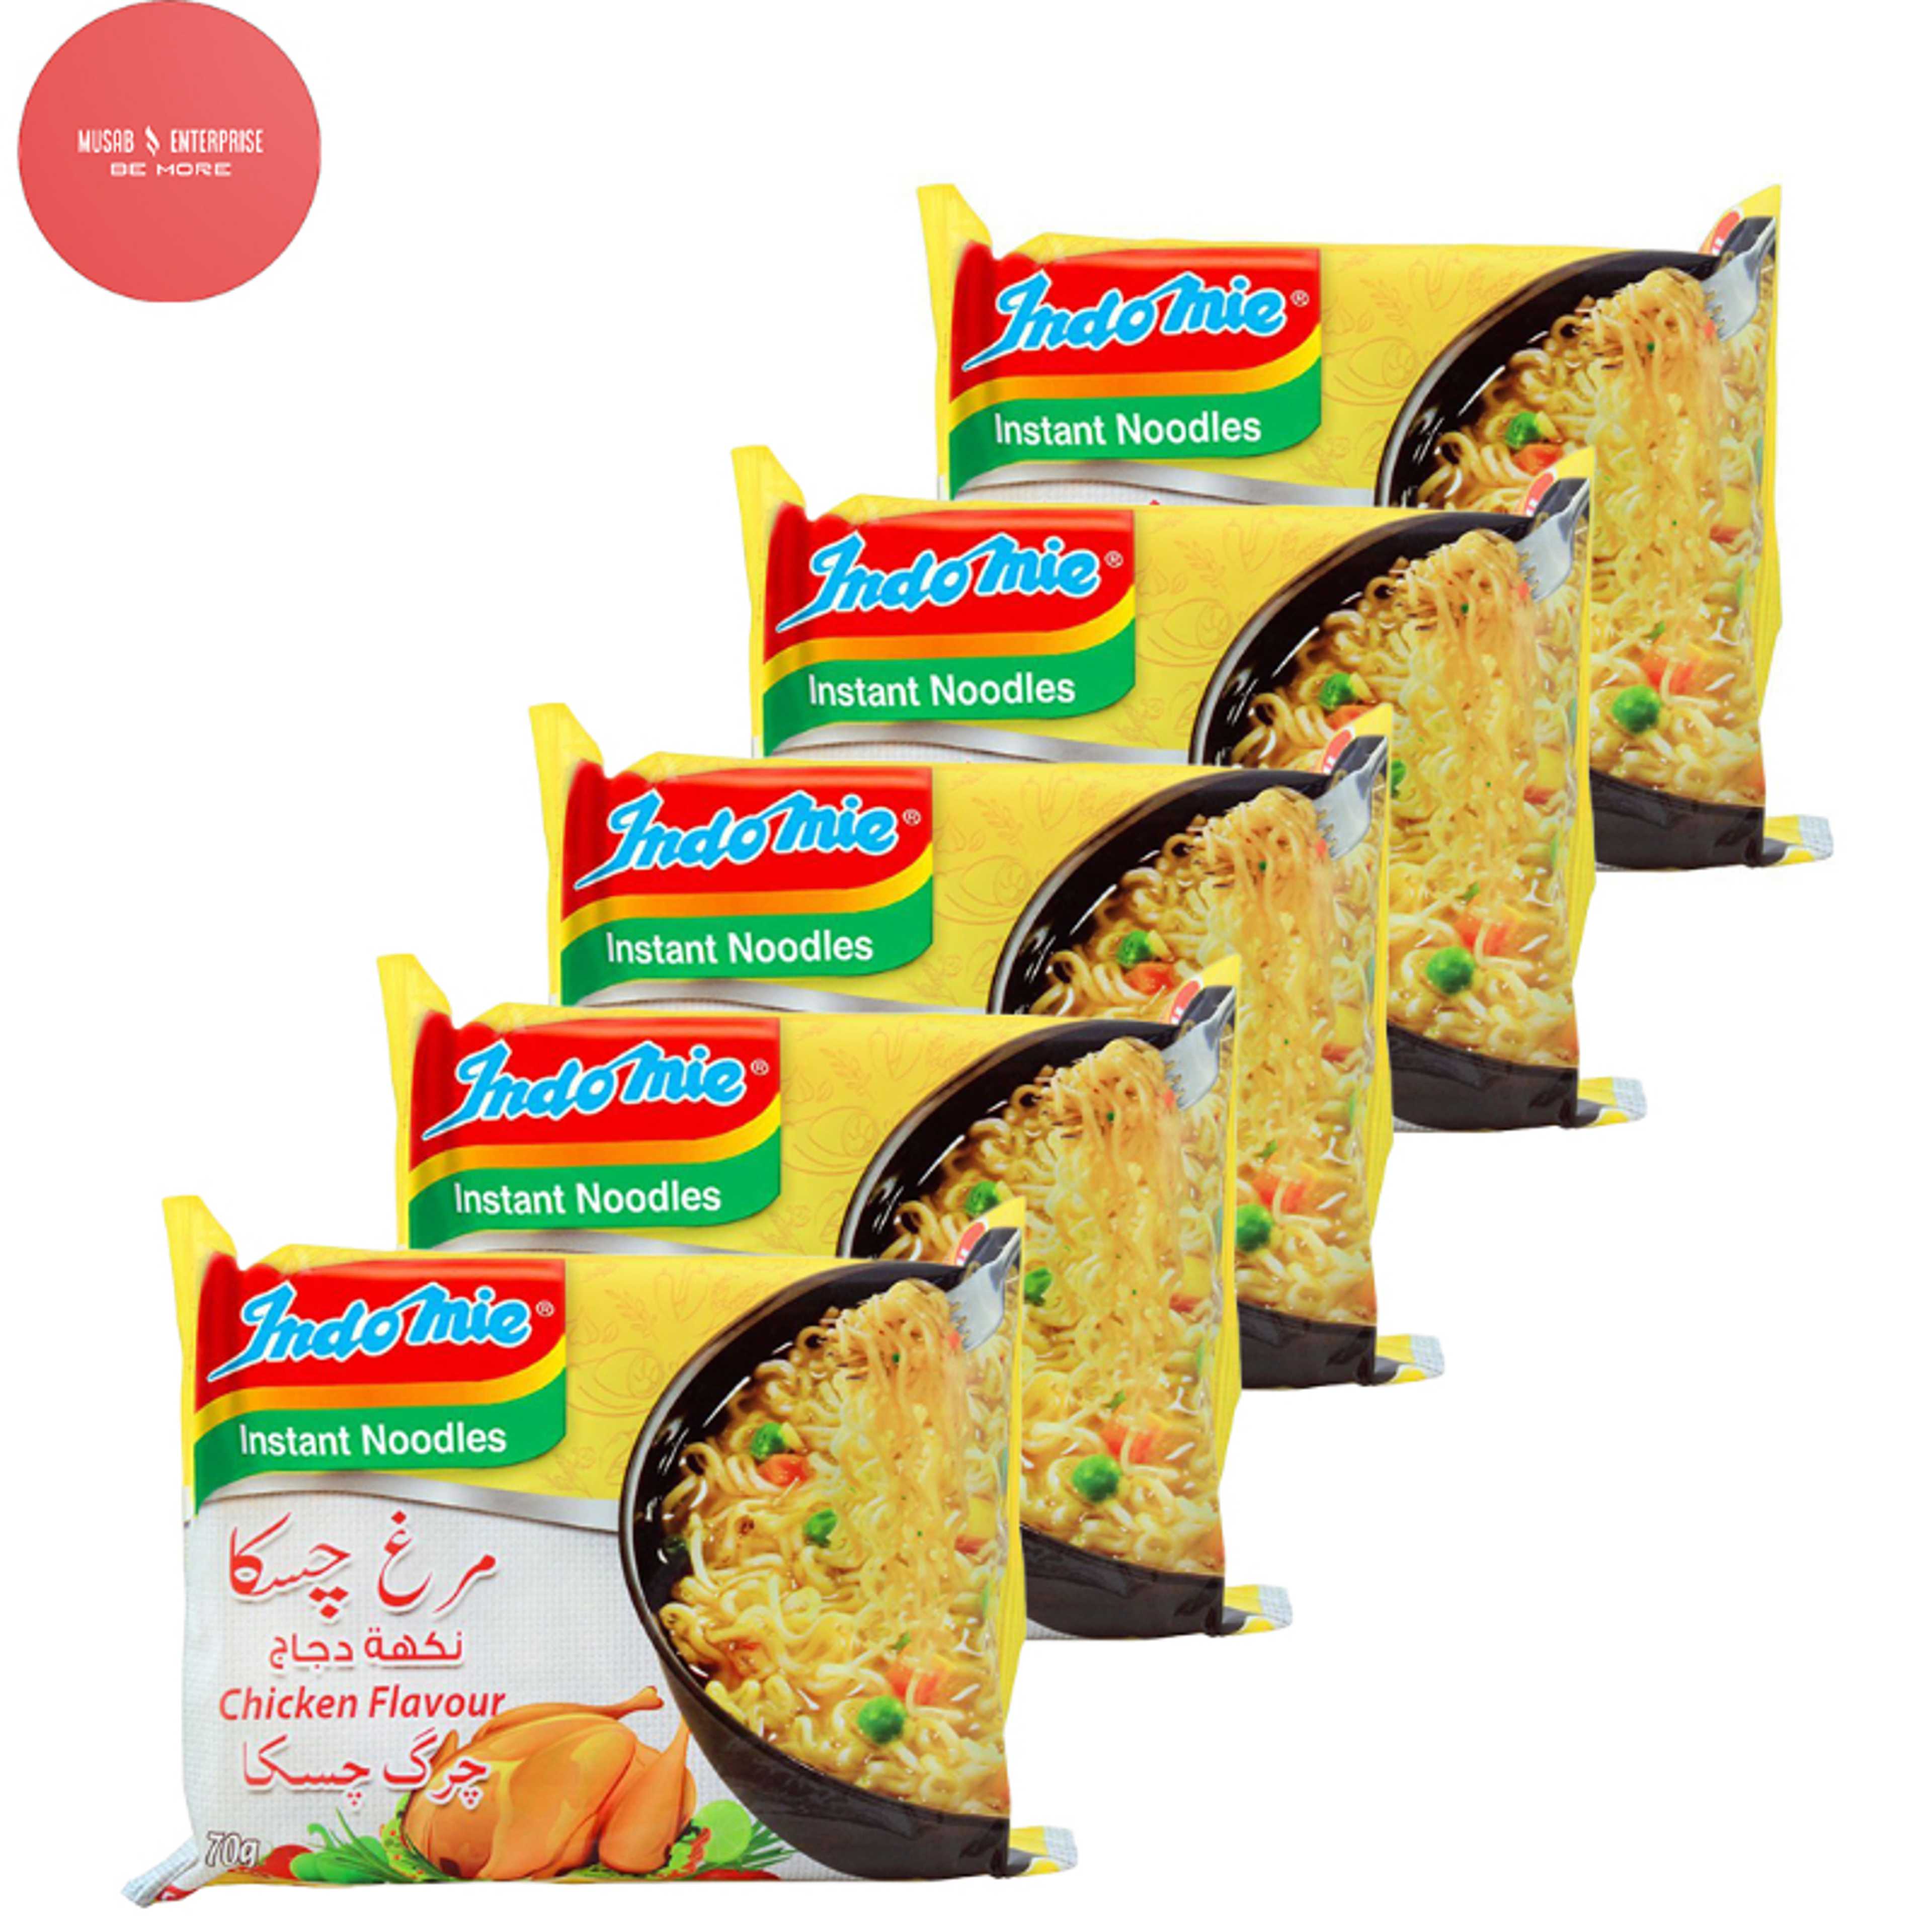 Indomie Chicken Flavour Instant Noodles, 70g, Pack of 5 Noodles